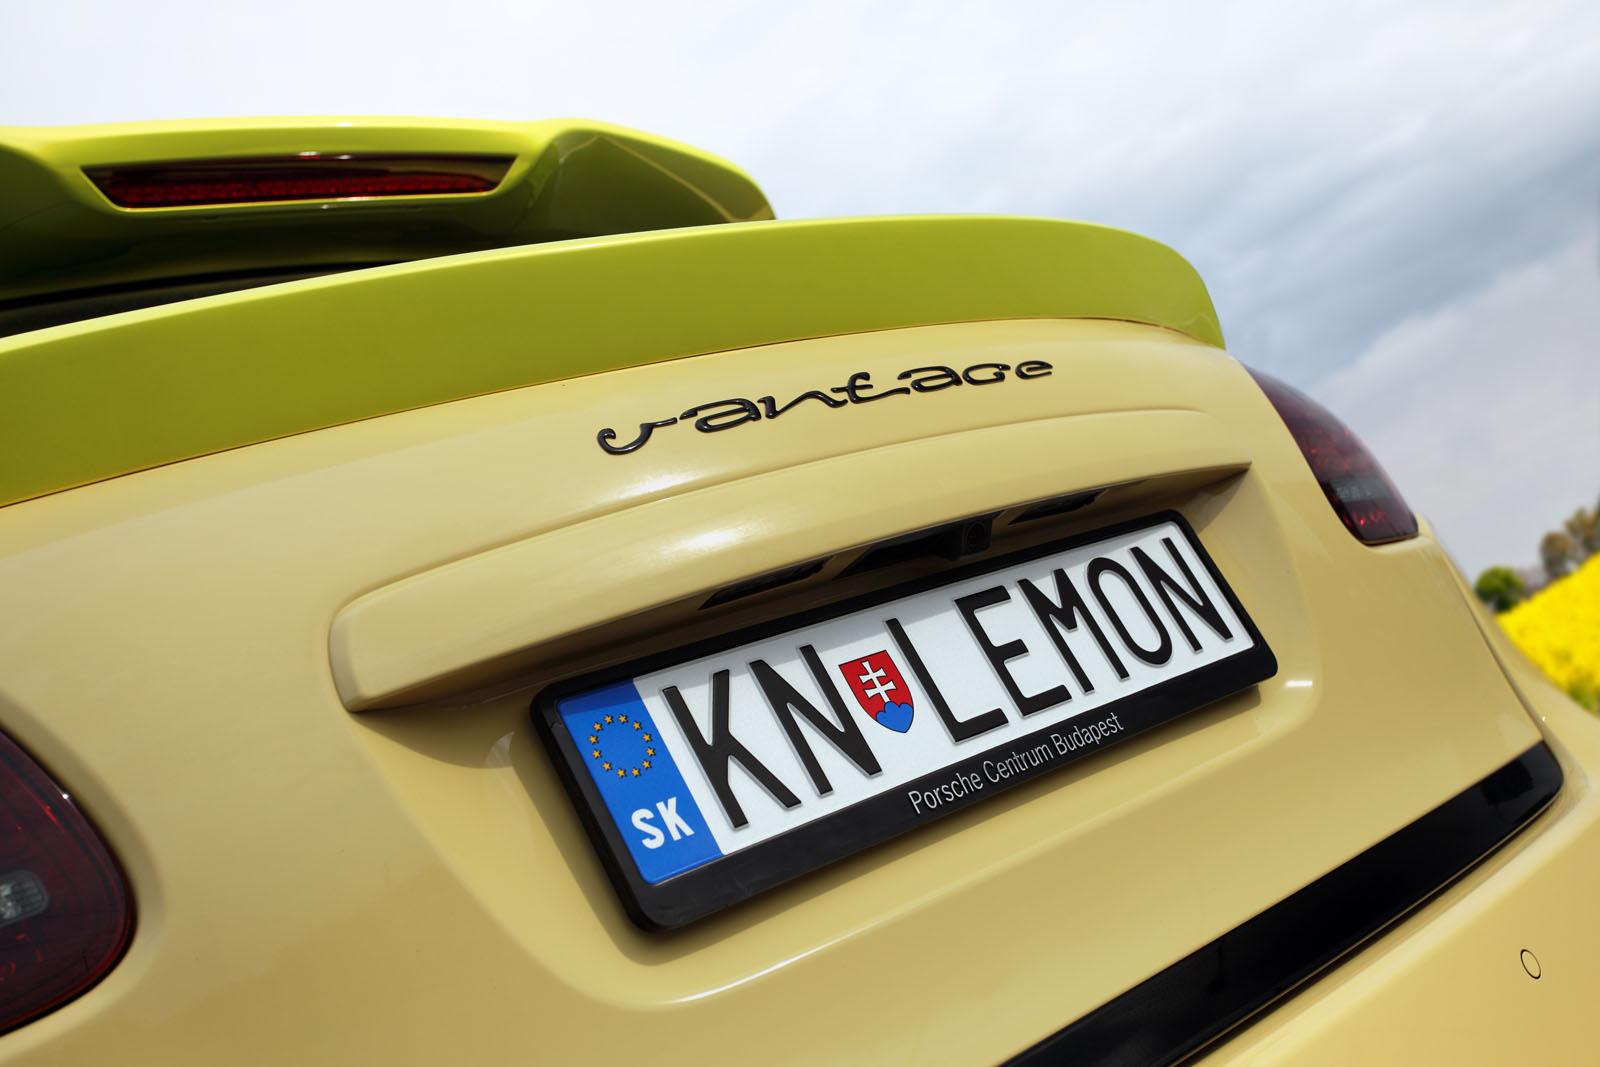 TopCar Vantage 2 Lemon Porsche Caynne II